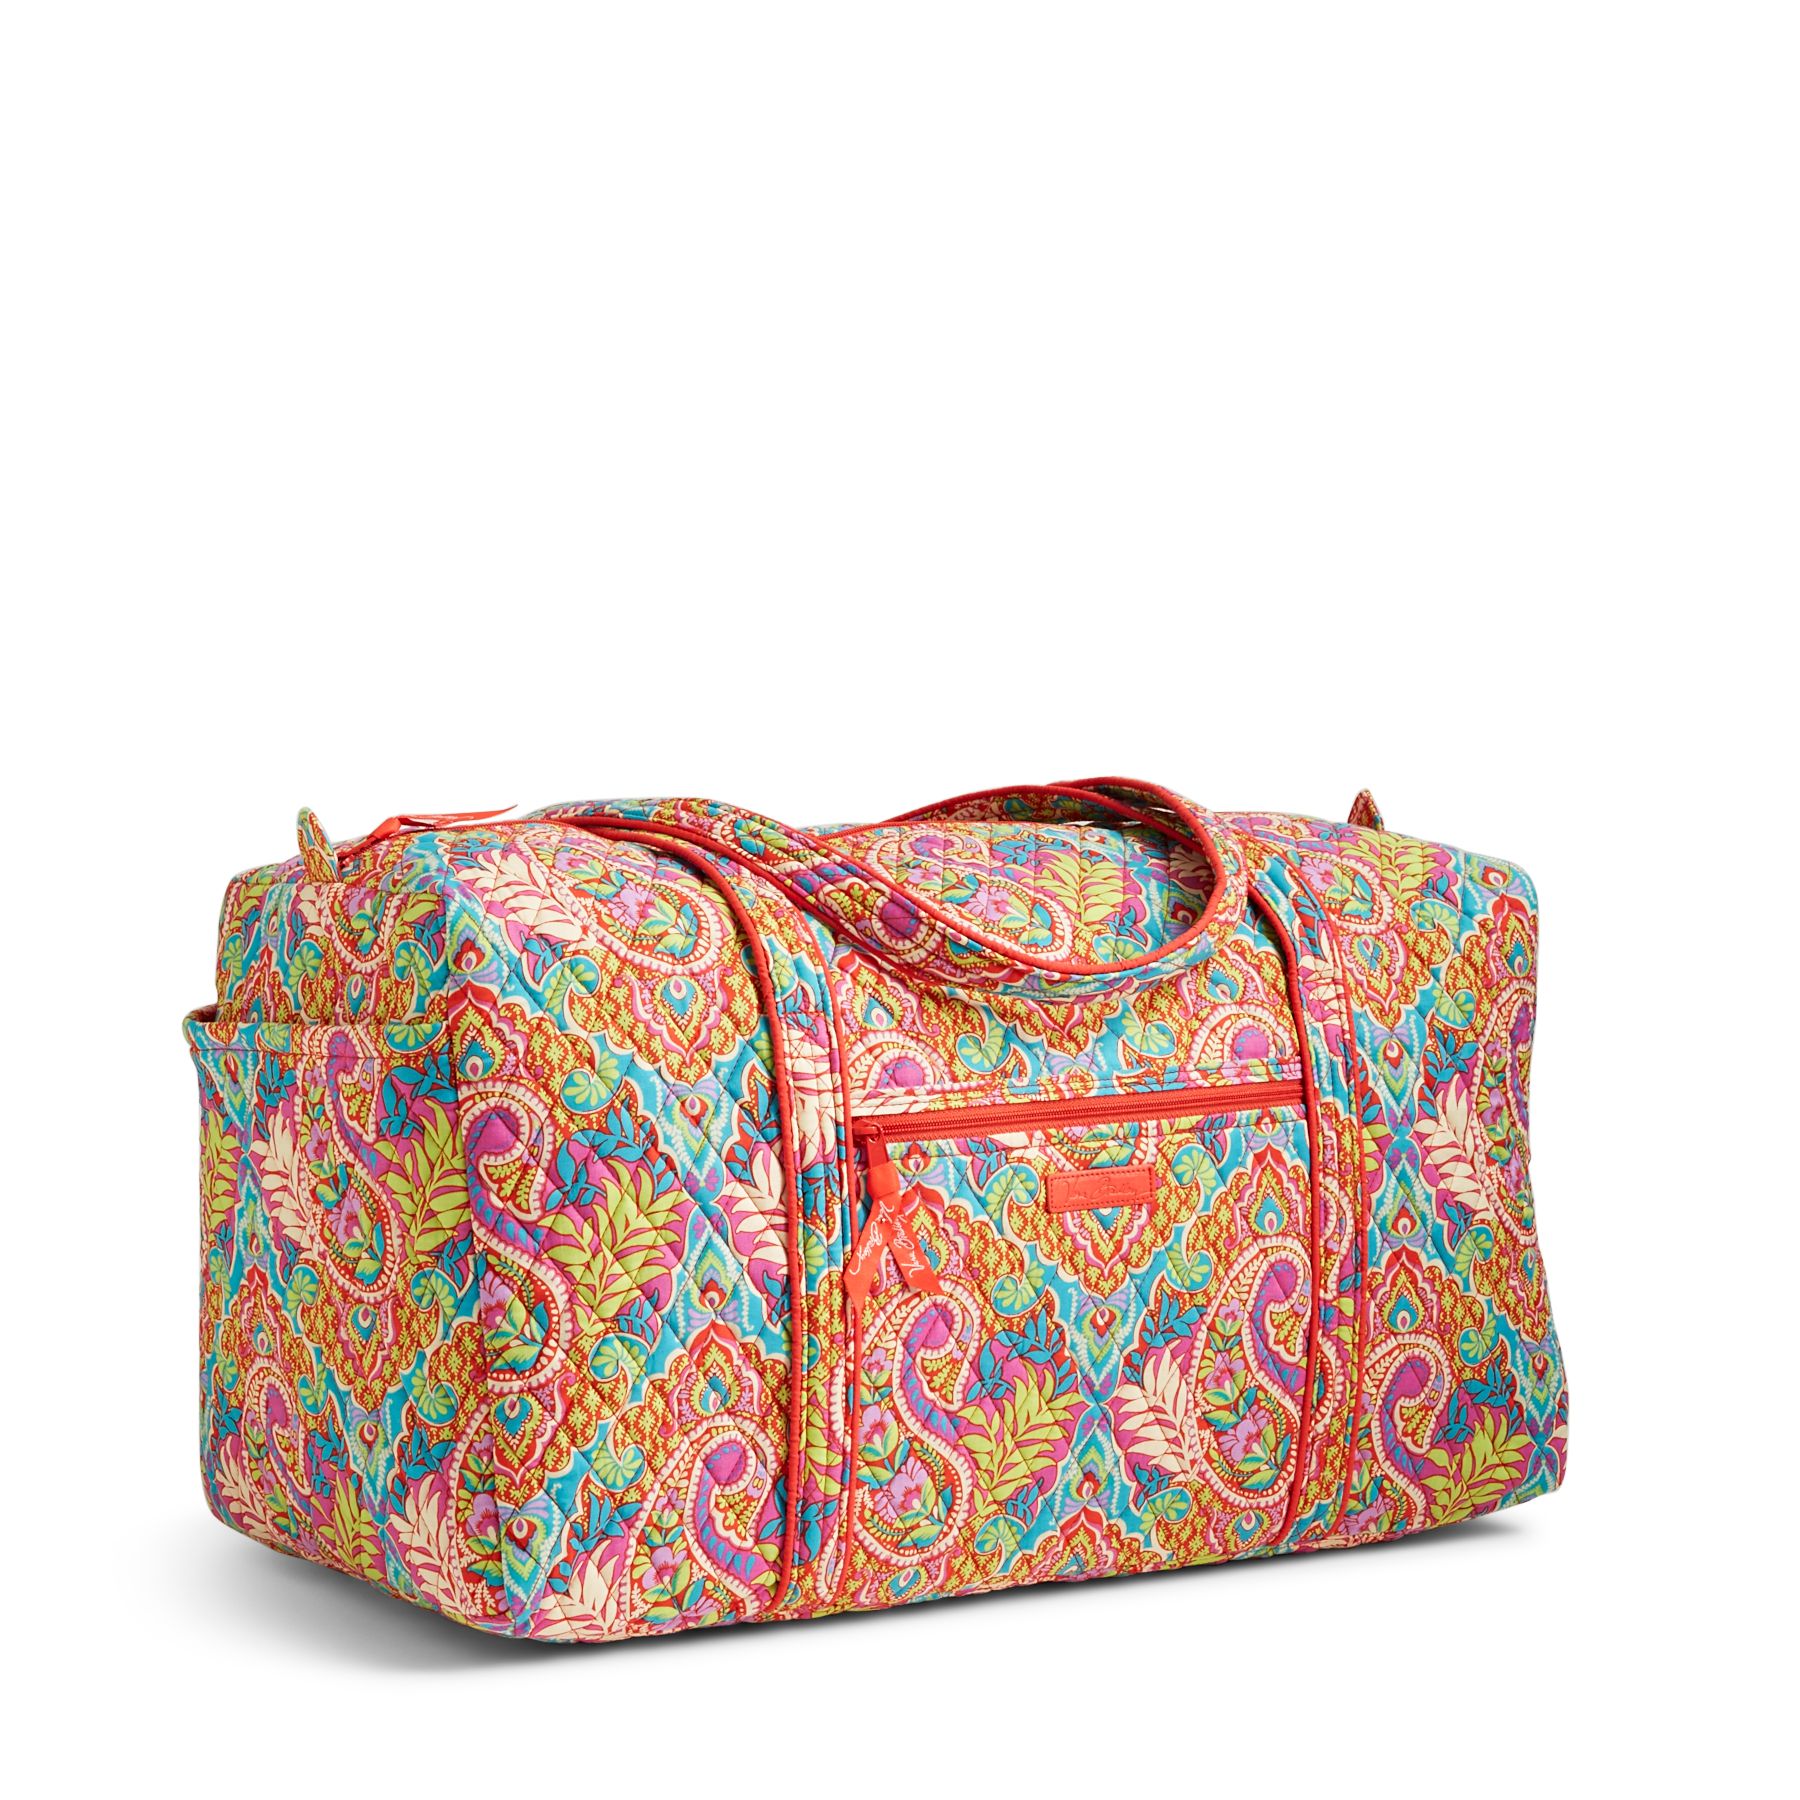 Vera Bradley Large Duffel Travel Bag | eBay